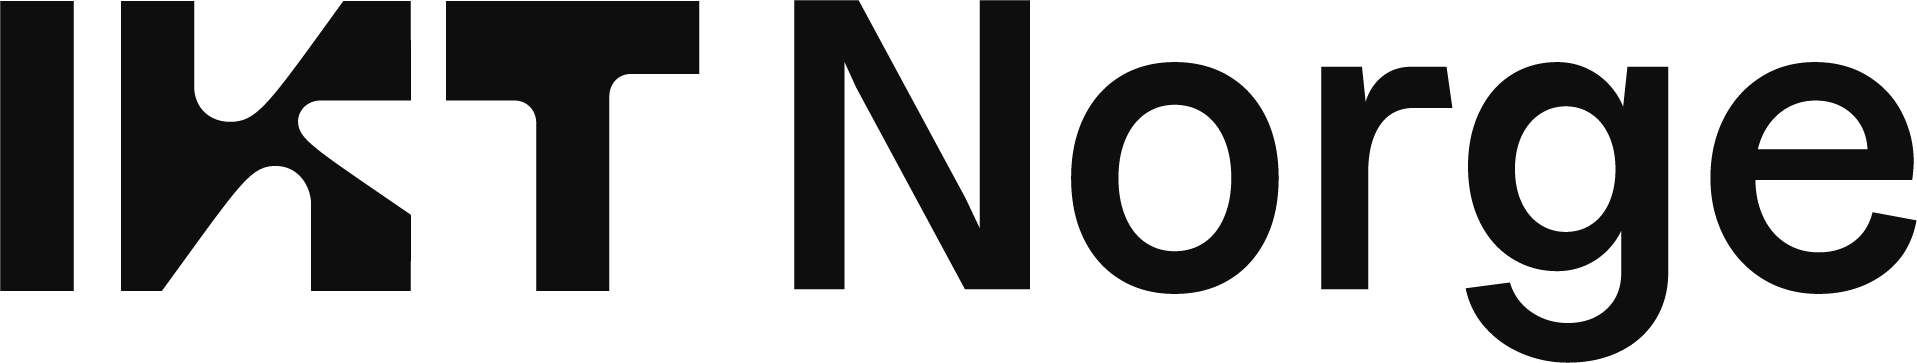 IKT Norge logo